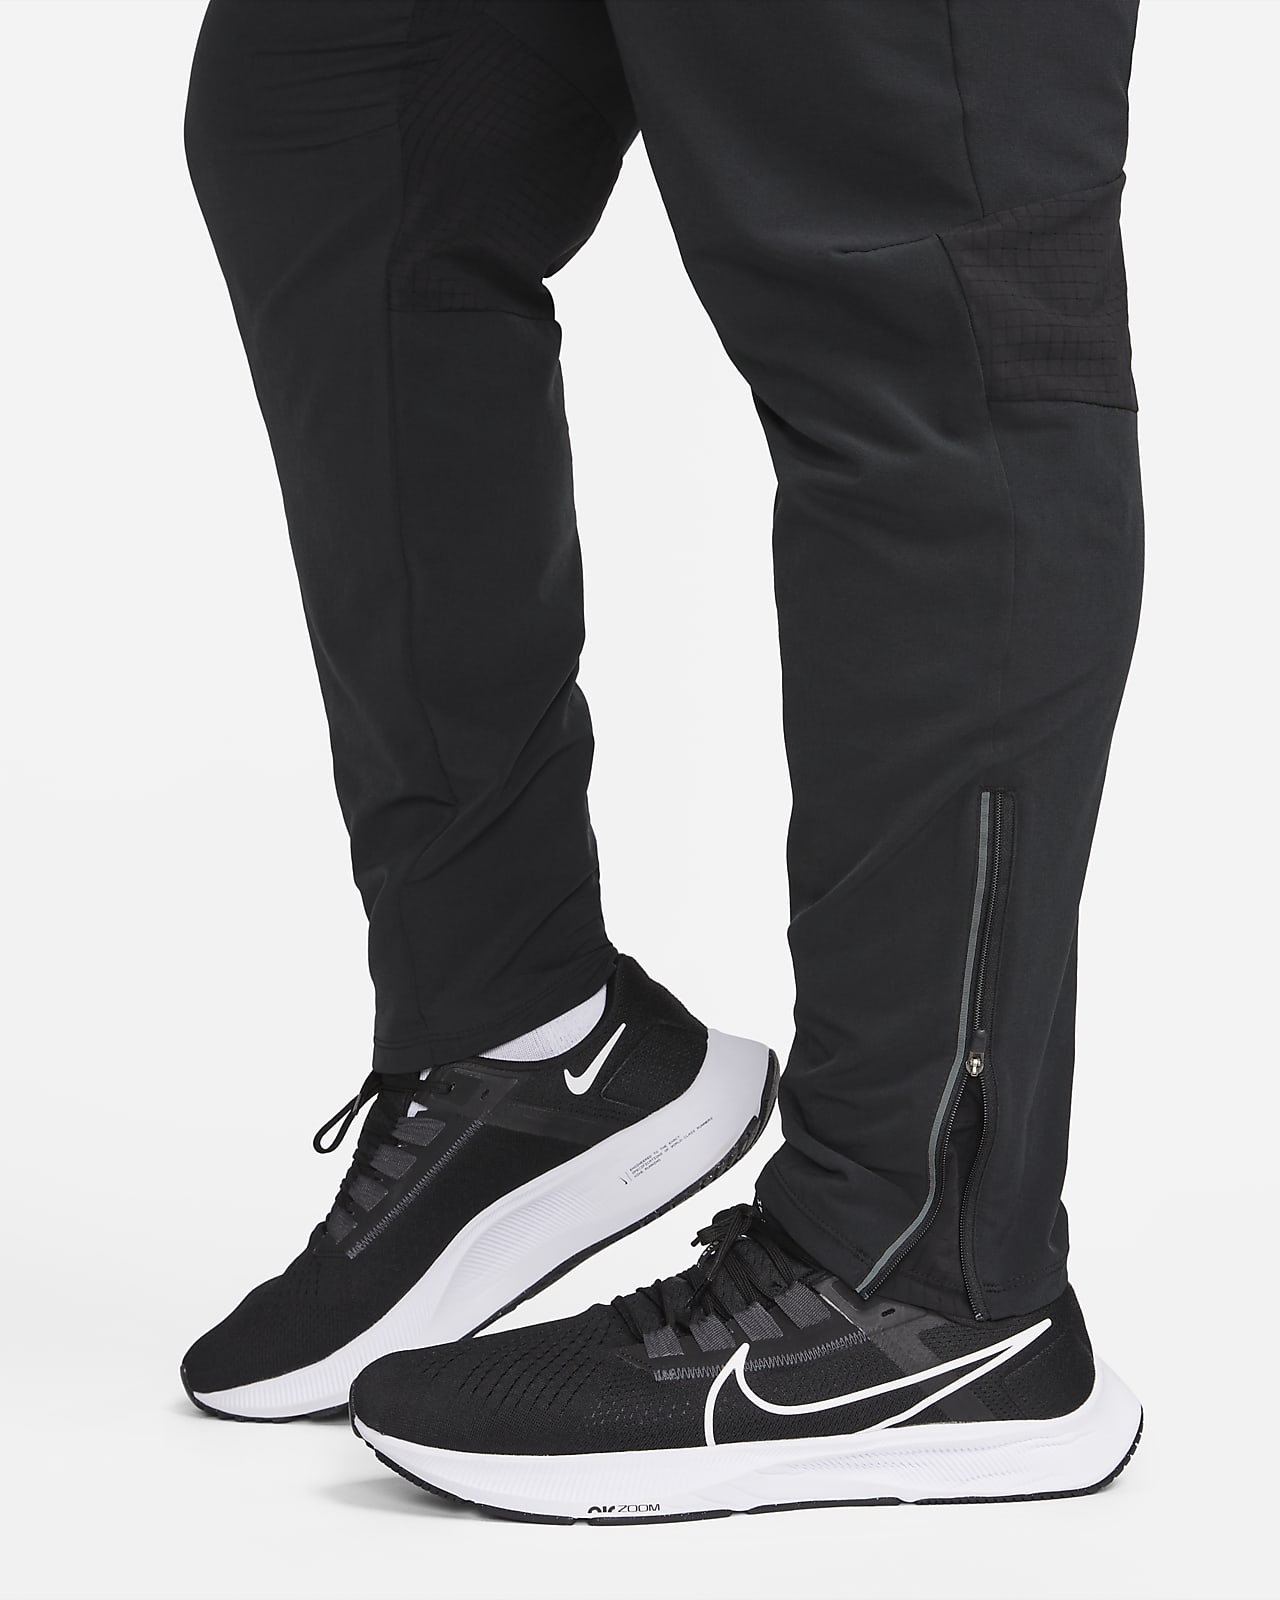 Woven jogging suit Nike Dri-FIT Phenom Elite - Clothing Running - Running -  Physical maintenance